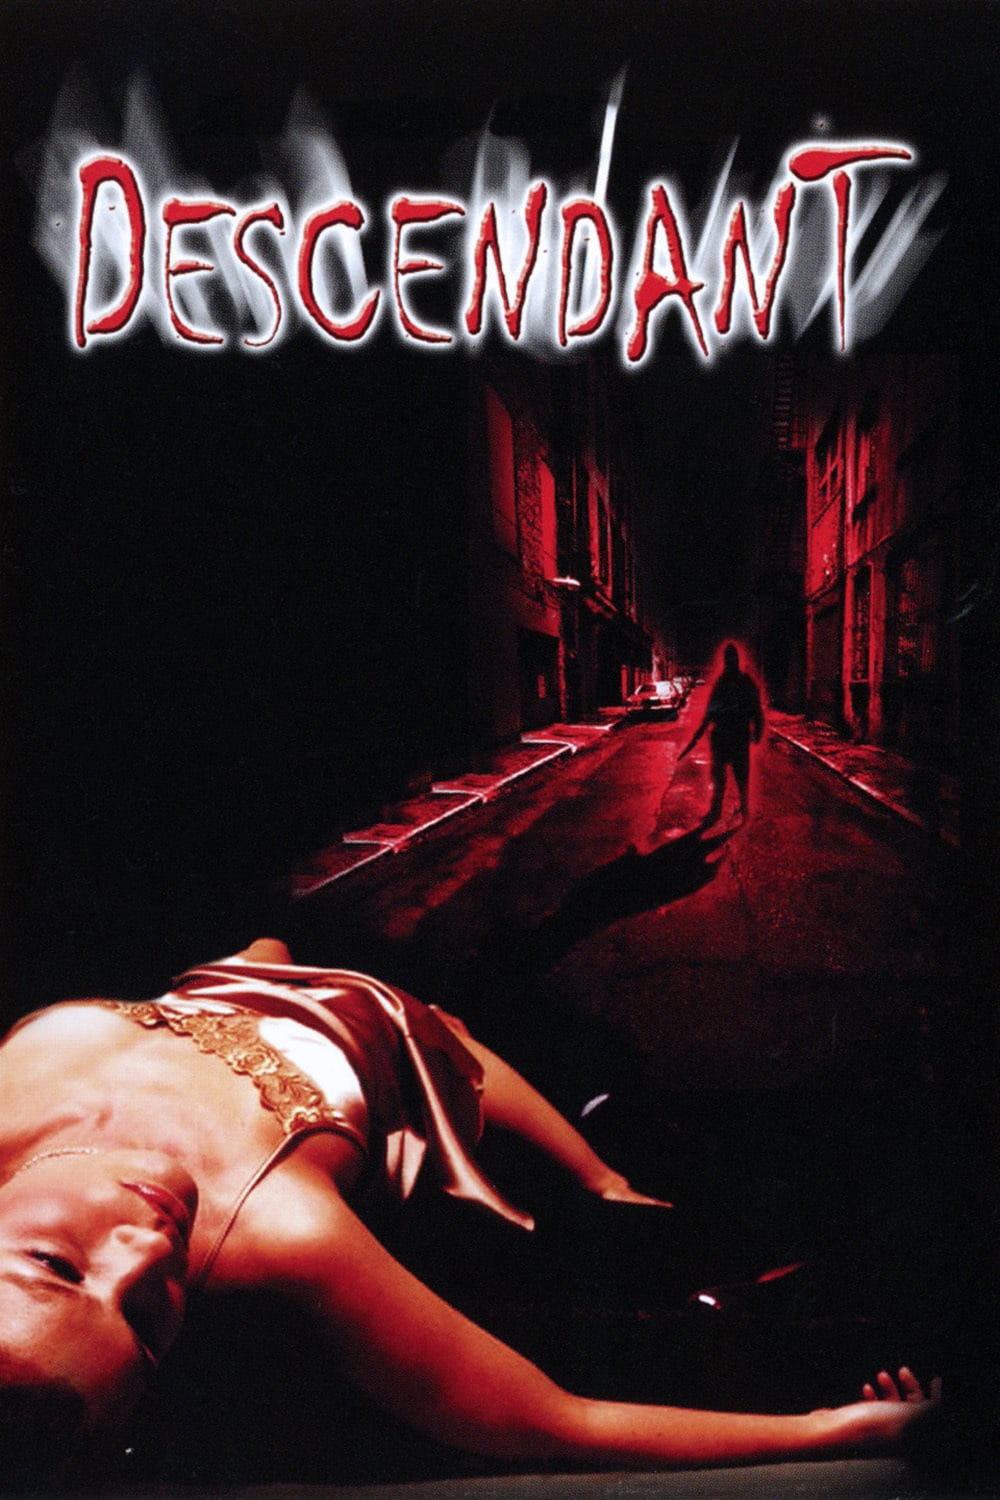 Plakat von "Descendant"